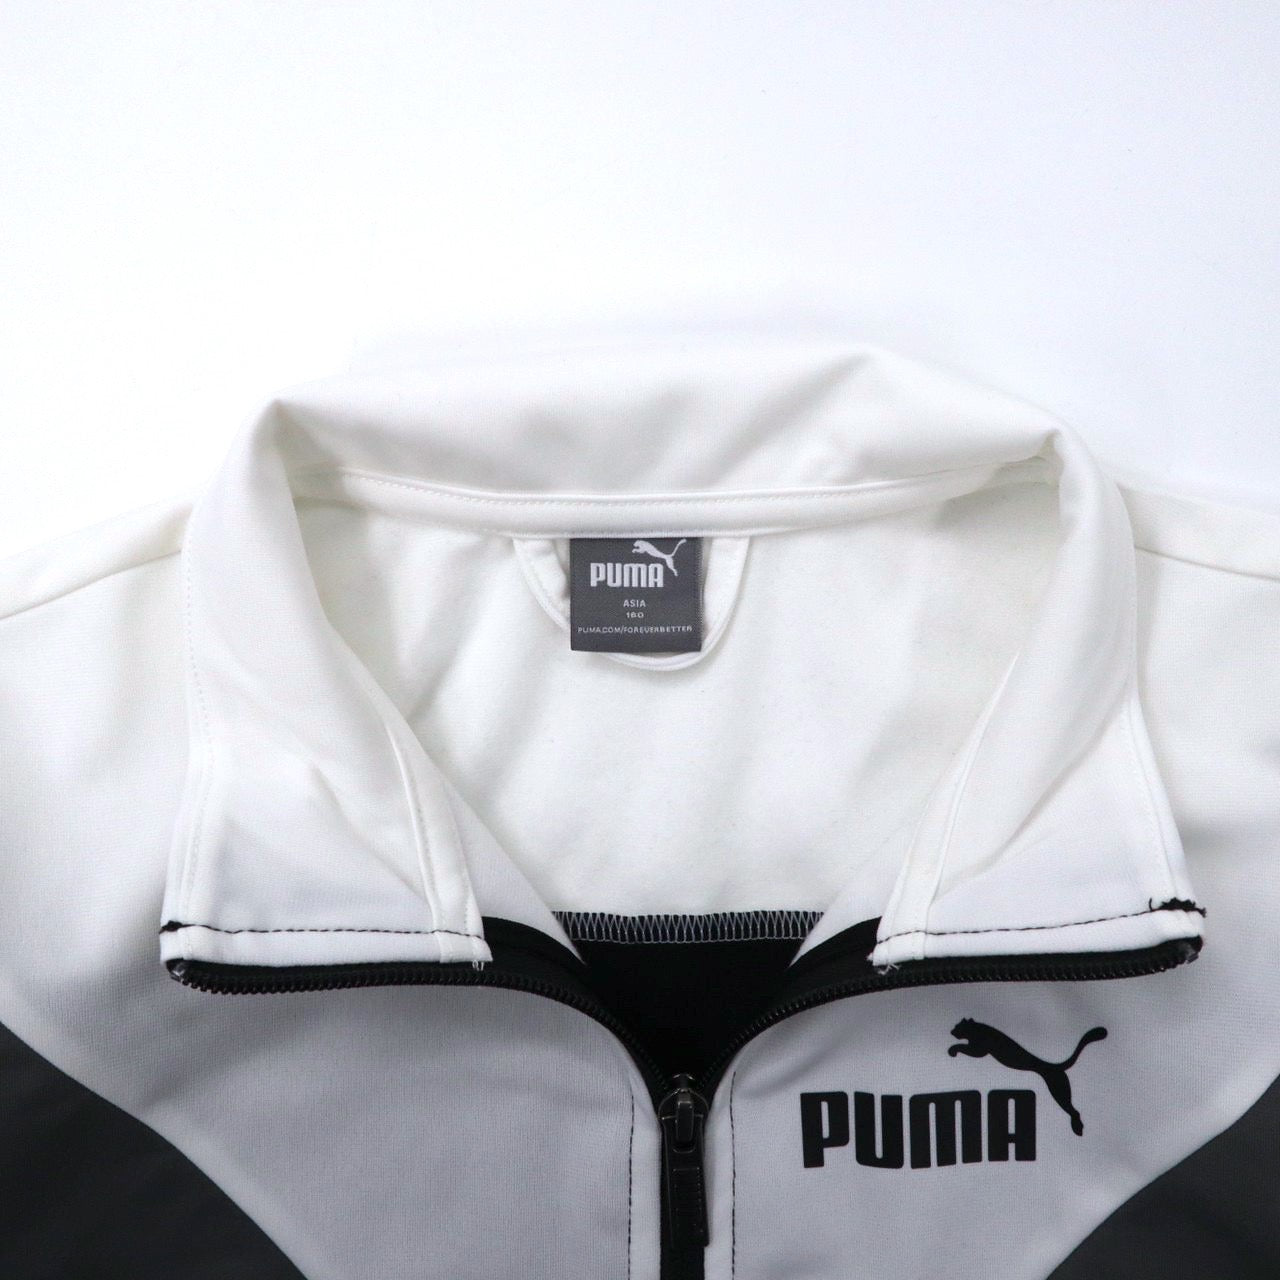 PUMA TRACK JACKET Setup jersey 160 Black polyester One Point Logo 585316-01  2020 model – 日本然リトテ